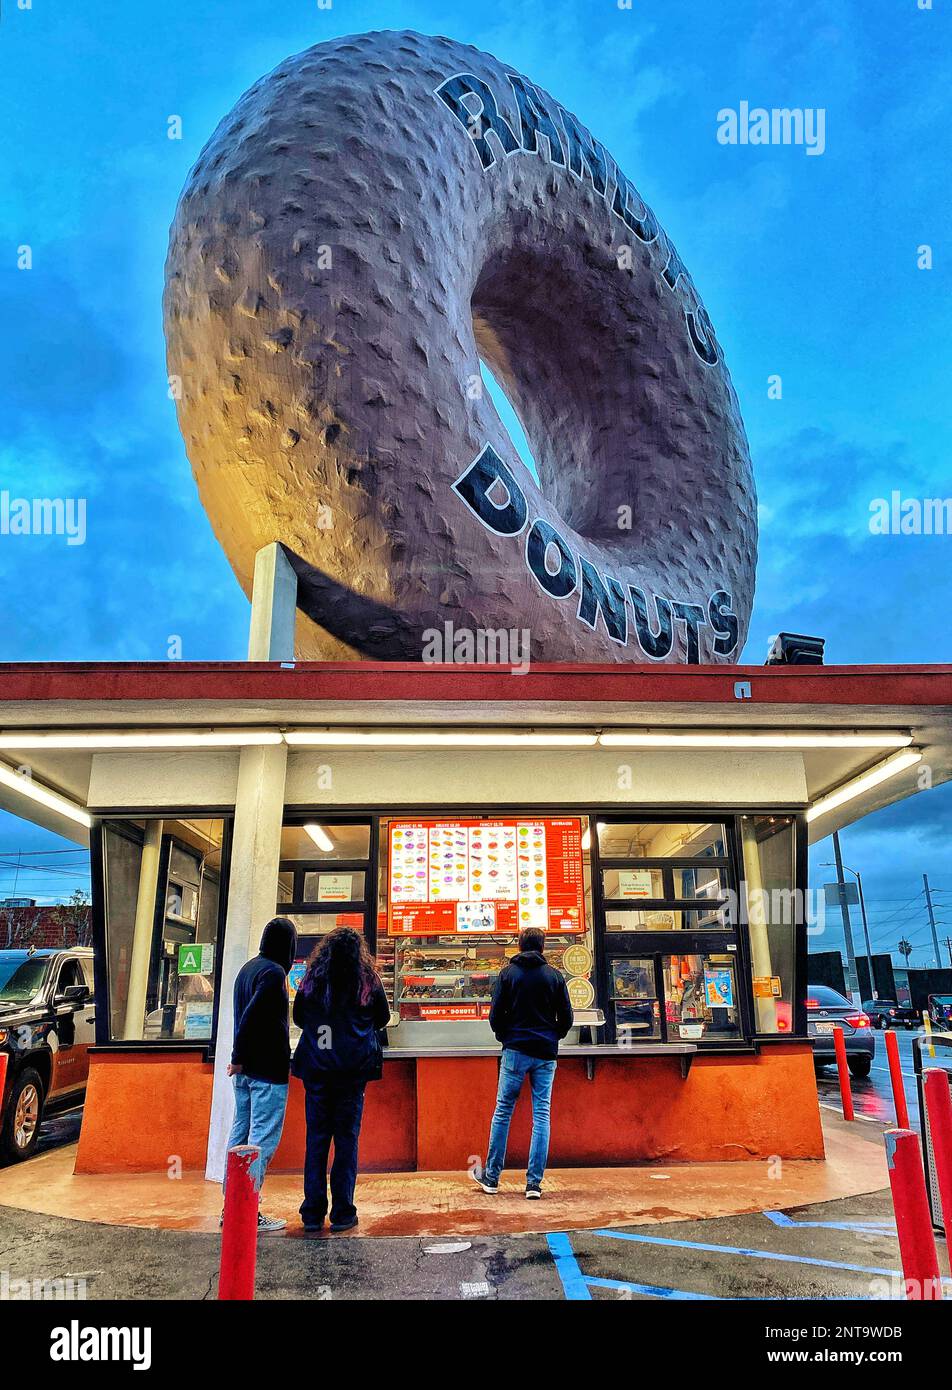 Randy's Donuts, bakery and landmark building in Inglewood, California Stock Photo